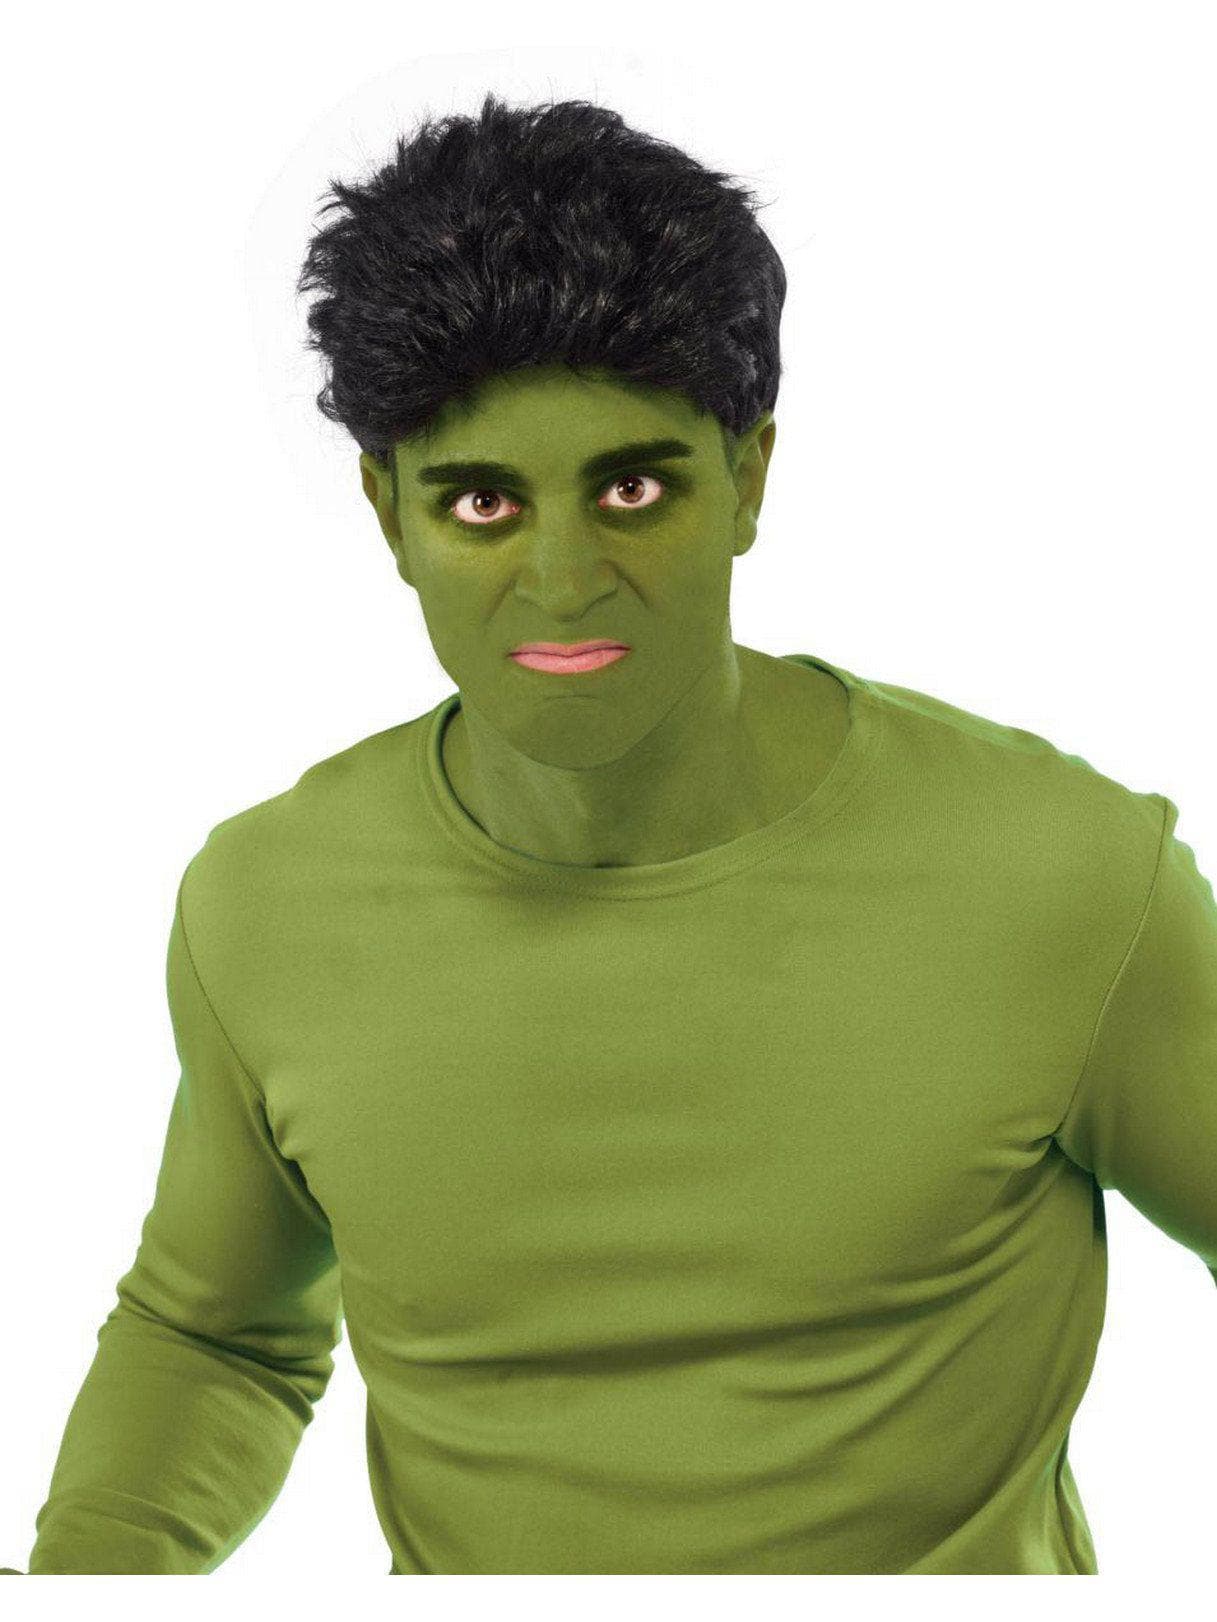 Boys' Avengers 2: Age of Ultron Hulk Wig - costumes.com